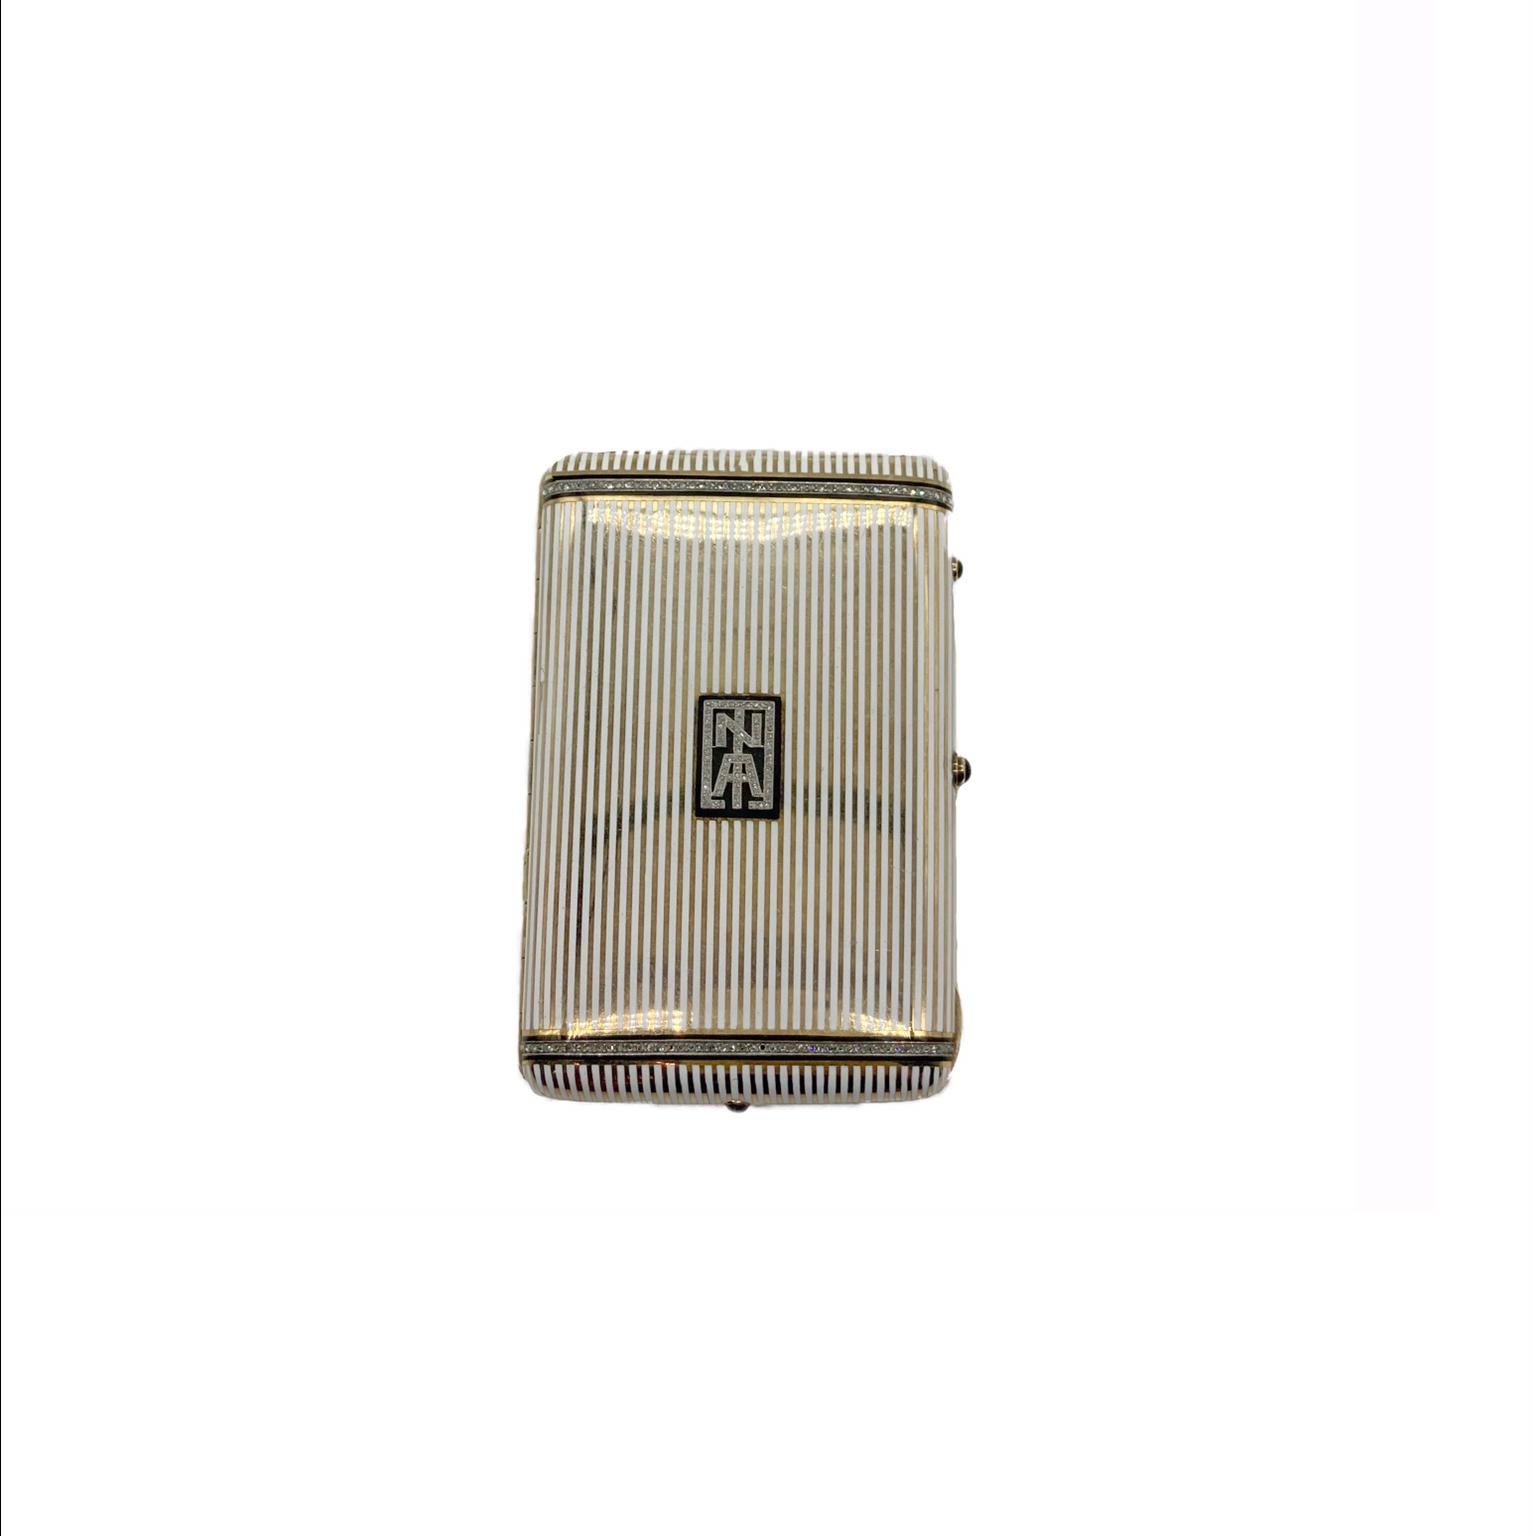 Brilliant Cut Art Deco Enamel and Diamond Cigarette Case For Sale